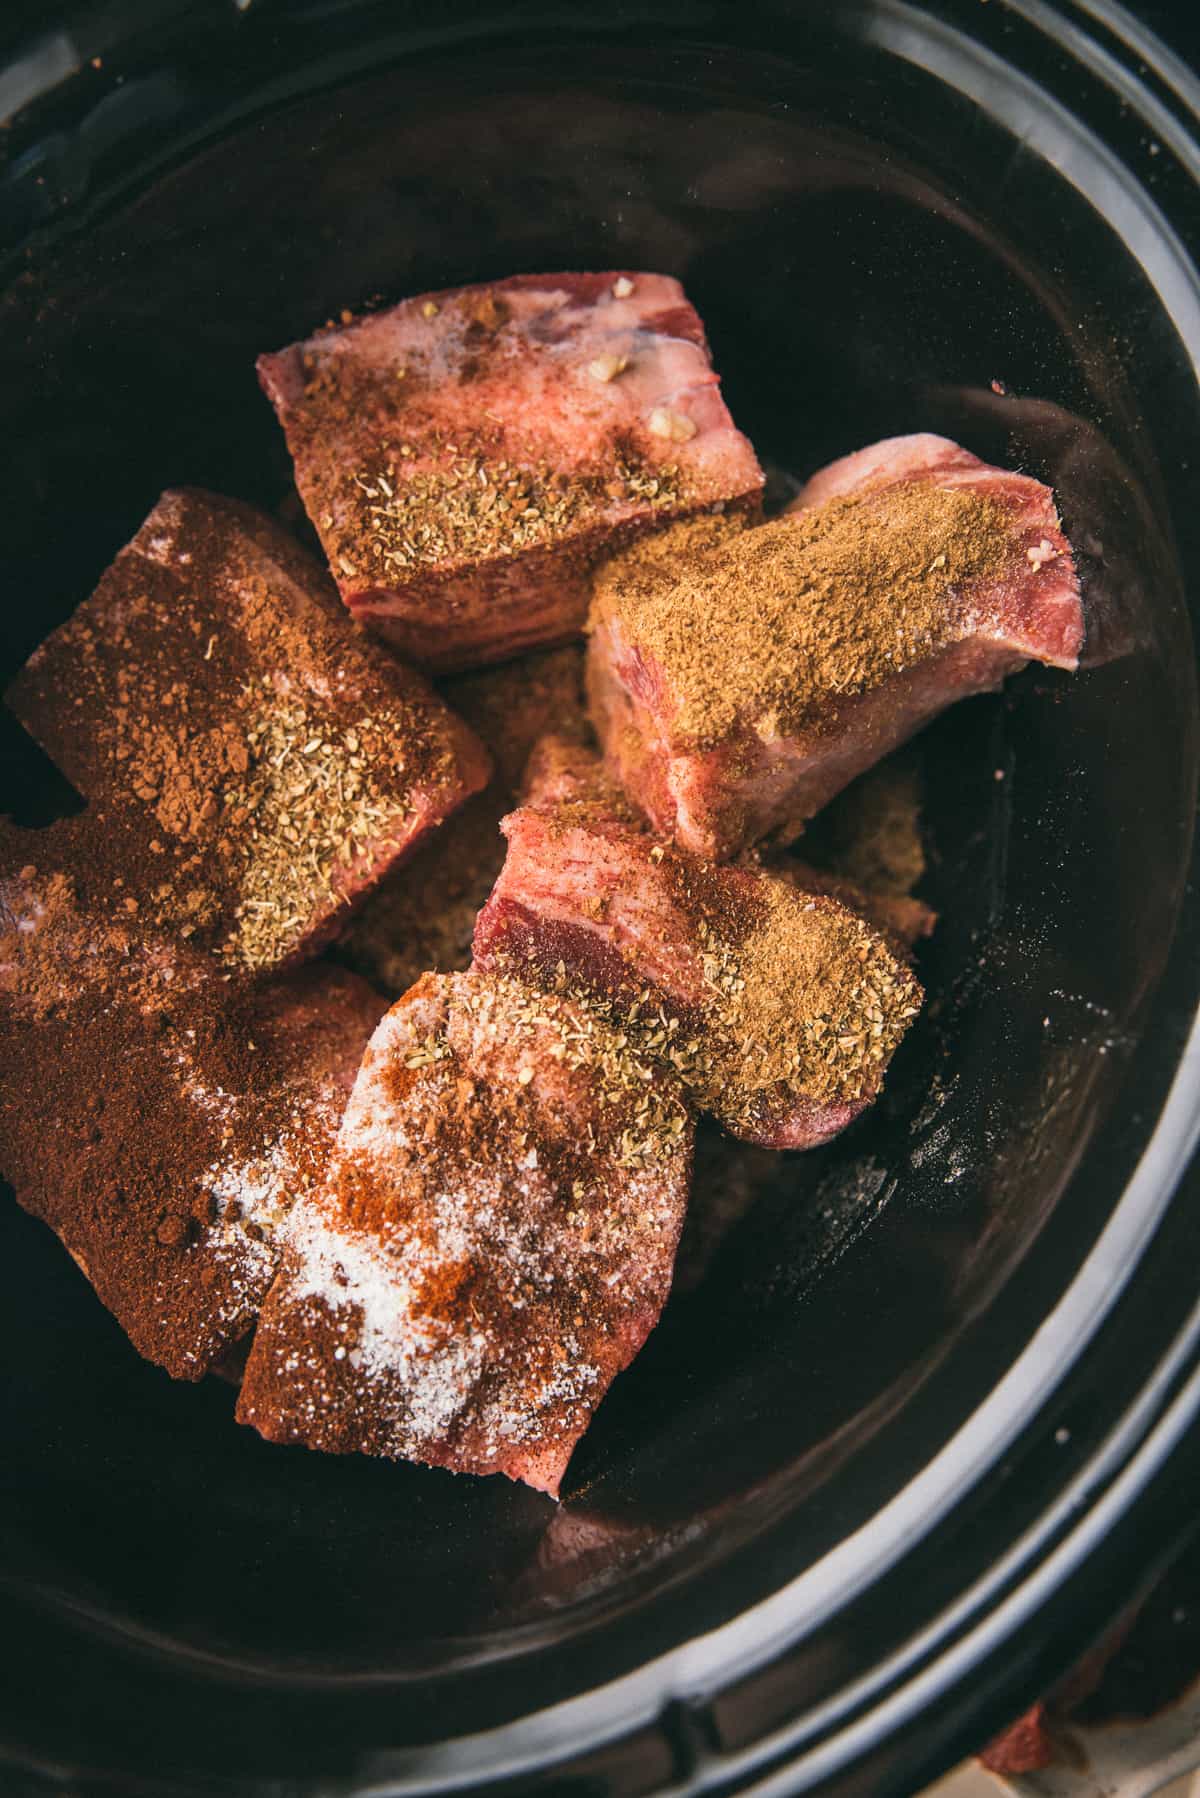 seasoned ribs in a crock pot before cooking